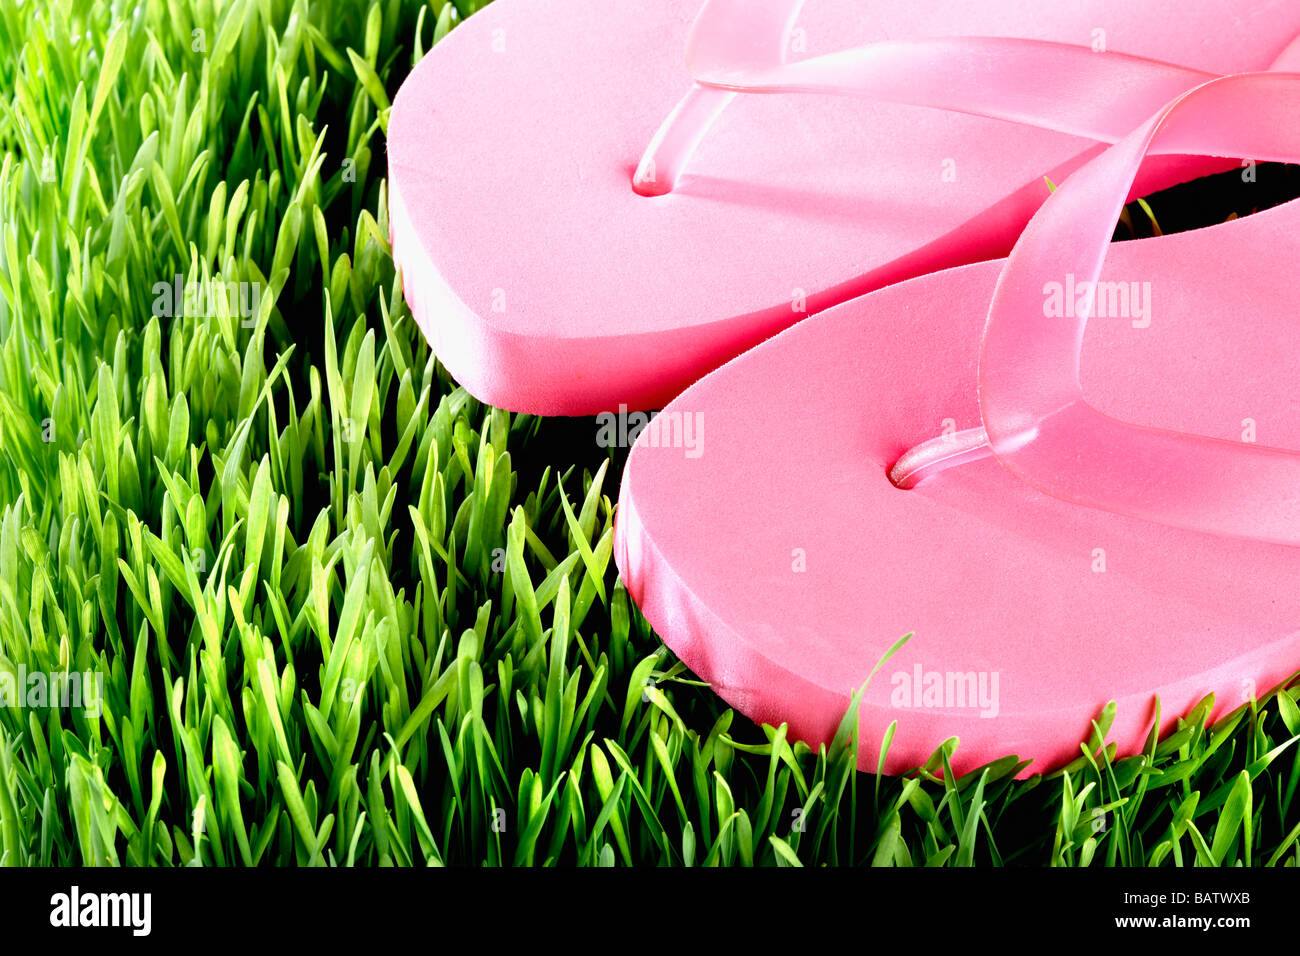 Pair of pink Flip-Flops, close-up Stock Photo